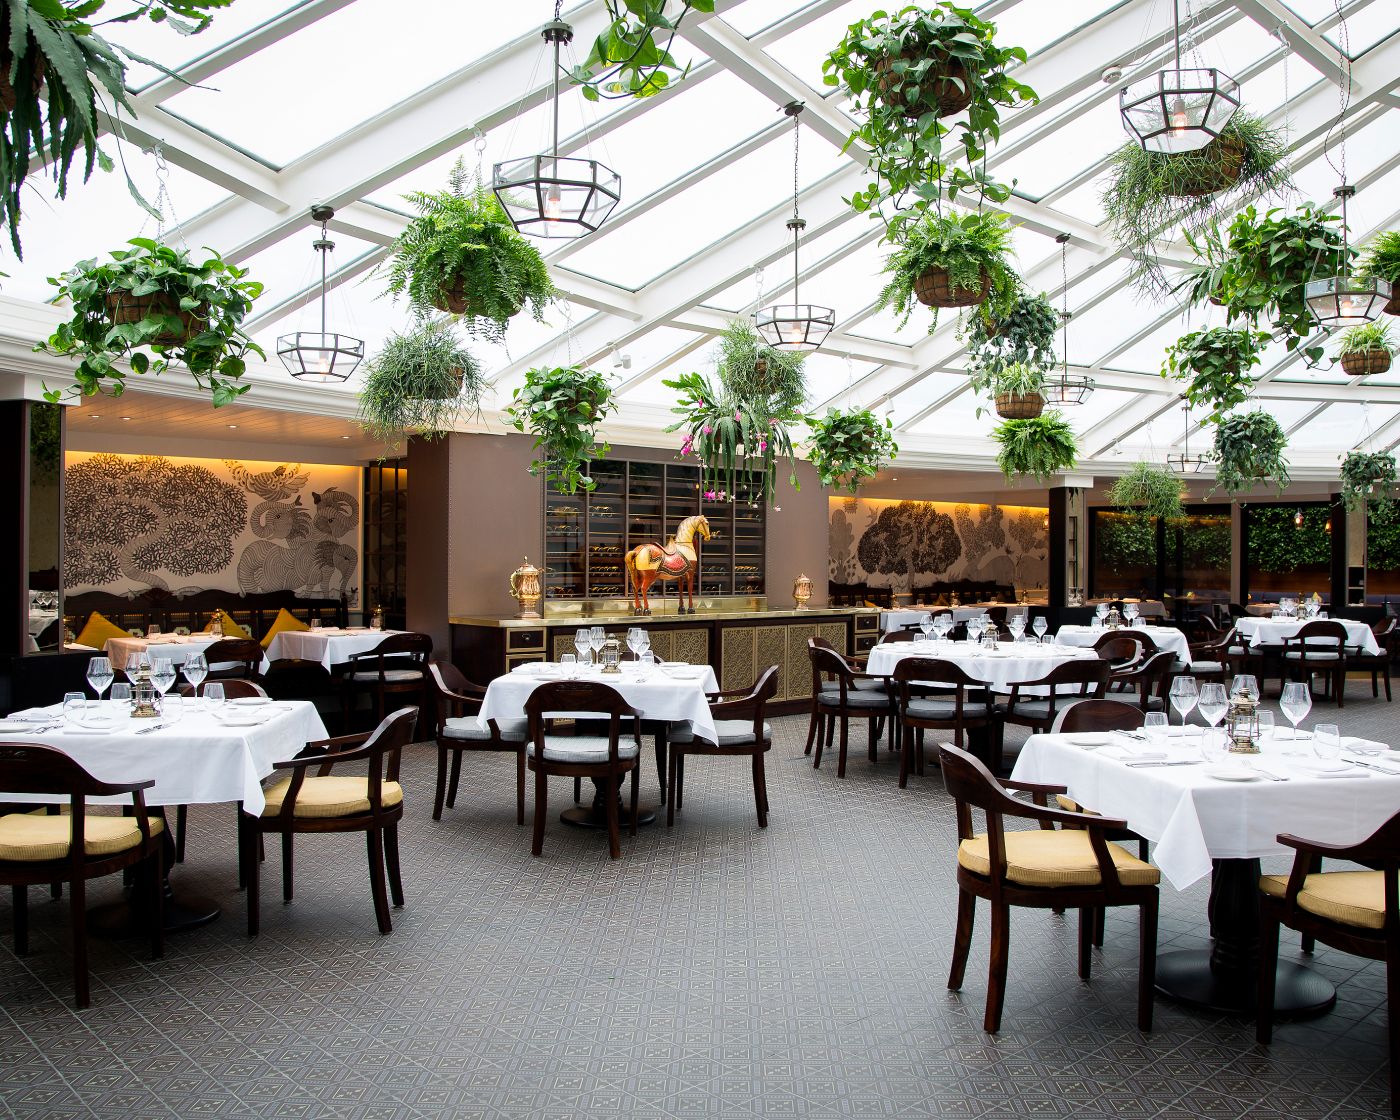 Bombay Brasserie - Luxury Restaurant at St James' Court, London